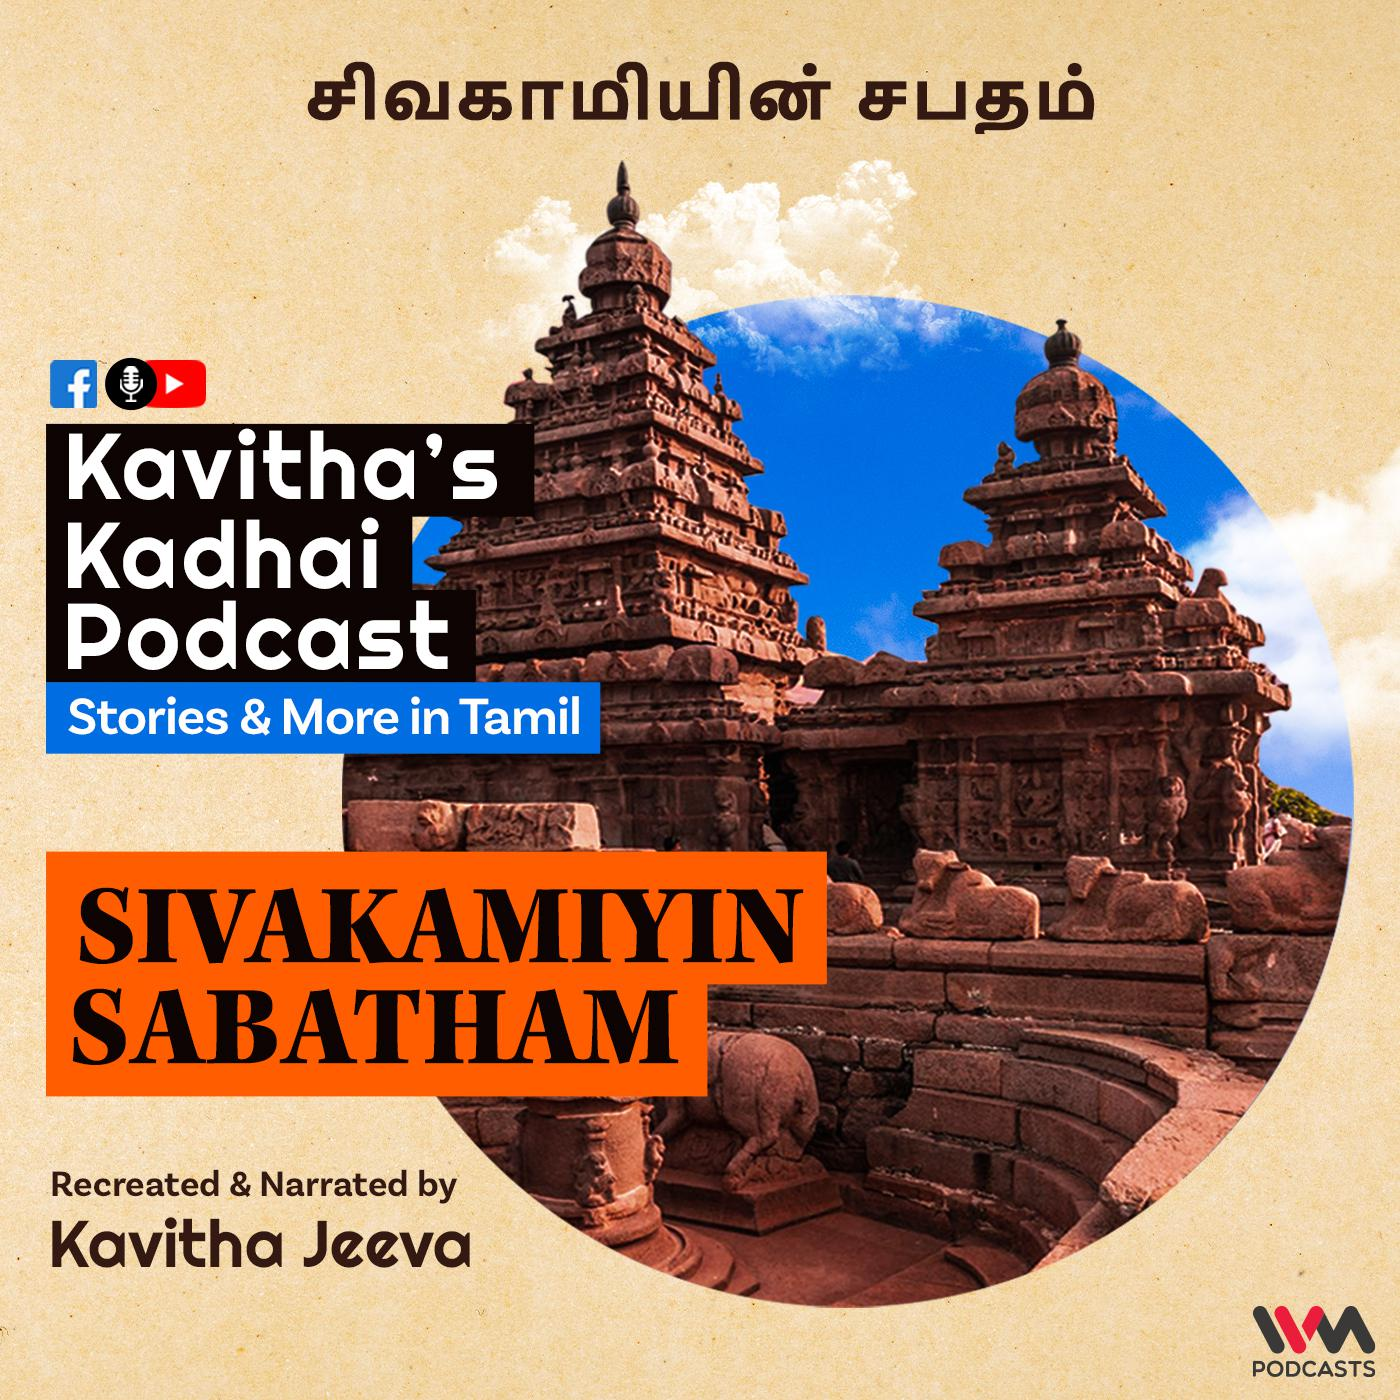 KadhaiPodcast's Sivakamiyin Sabatham with Kavitha Jeeva - Episode #132